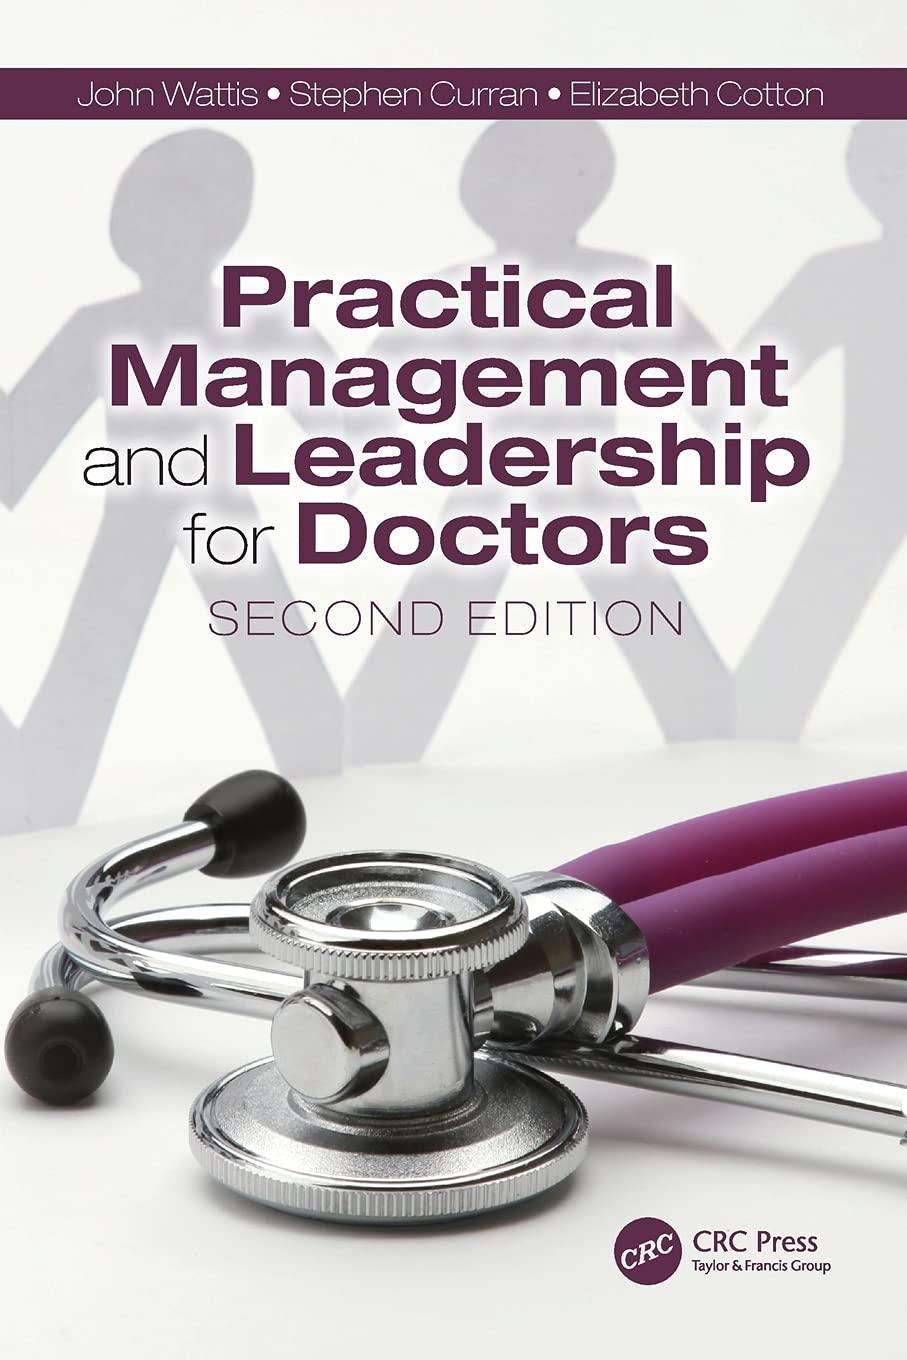 practical management and leadership for doctors 2nd edition john wattis, stephen curran, elizabeth cotton